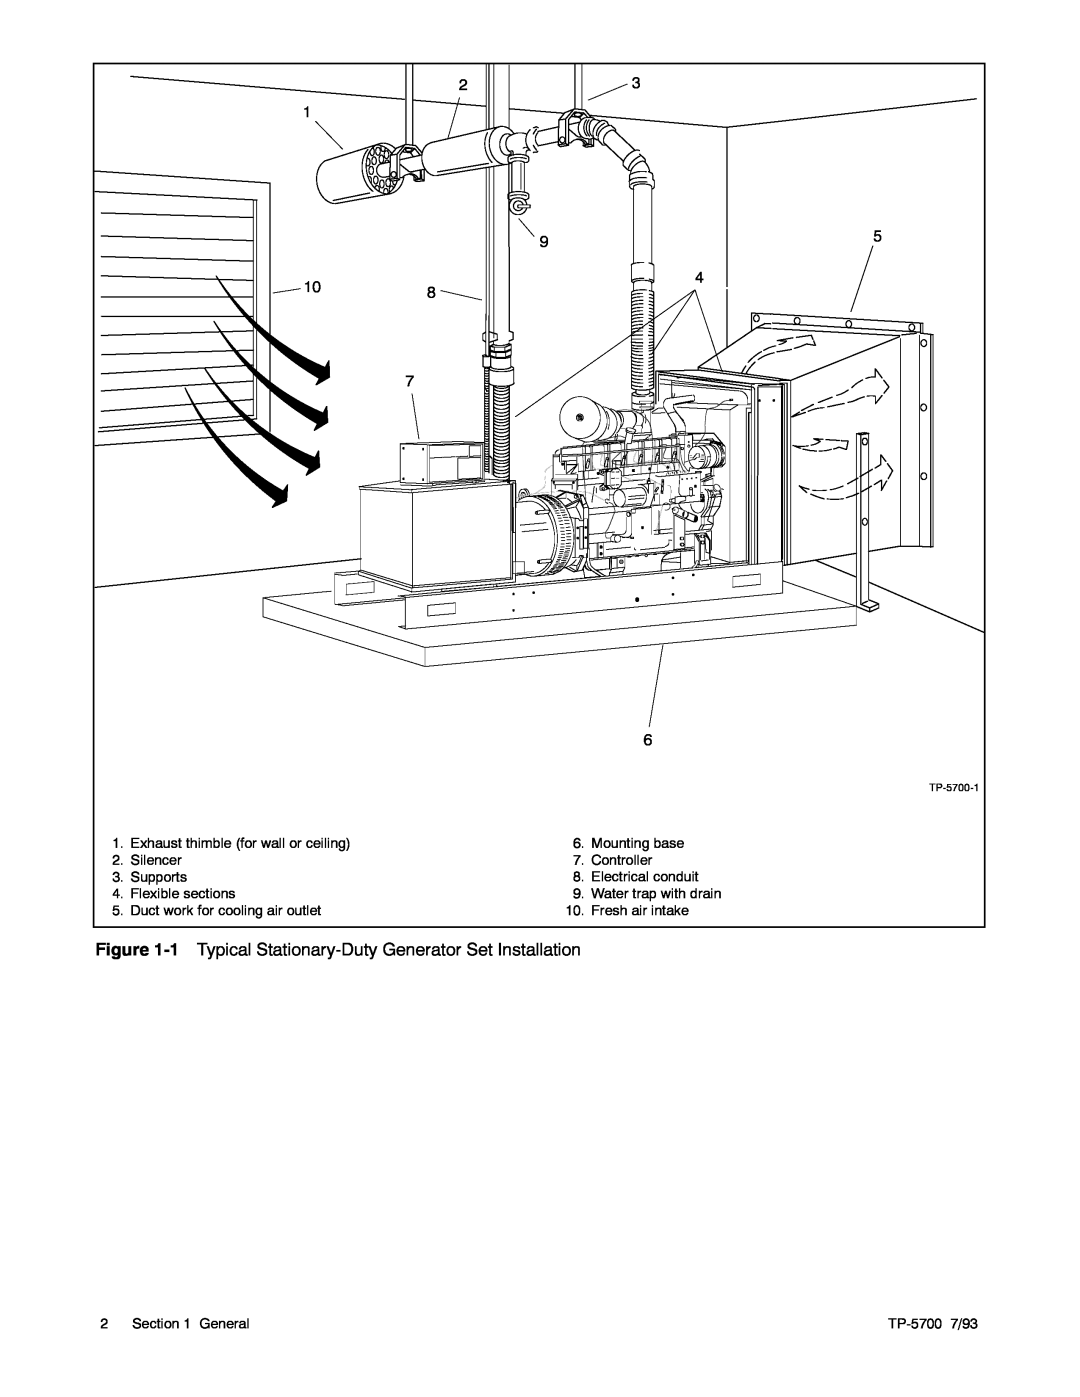 Kohler 20--2800 kW manual 1 Typical Stationary-Duty Generator Set Installation, TP-5700-1 